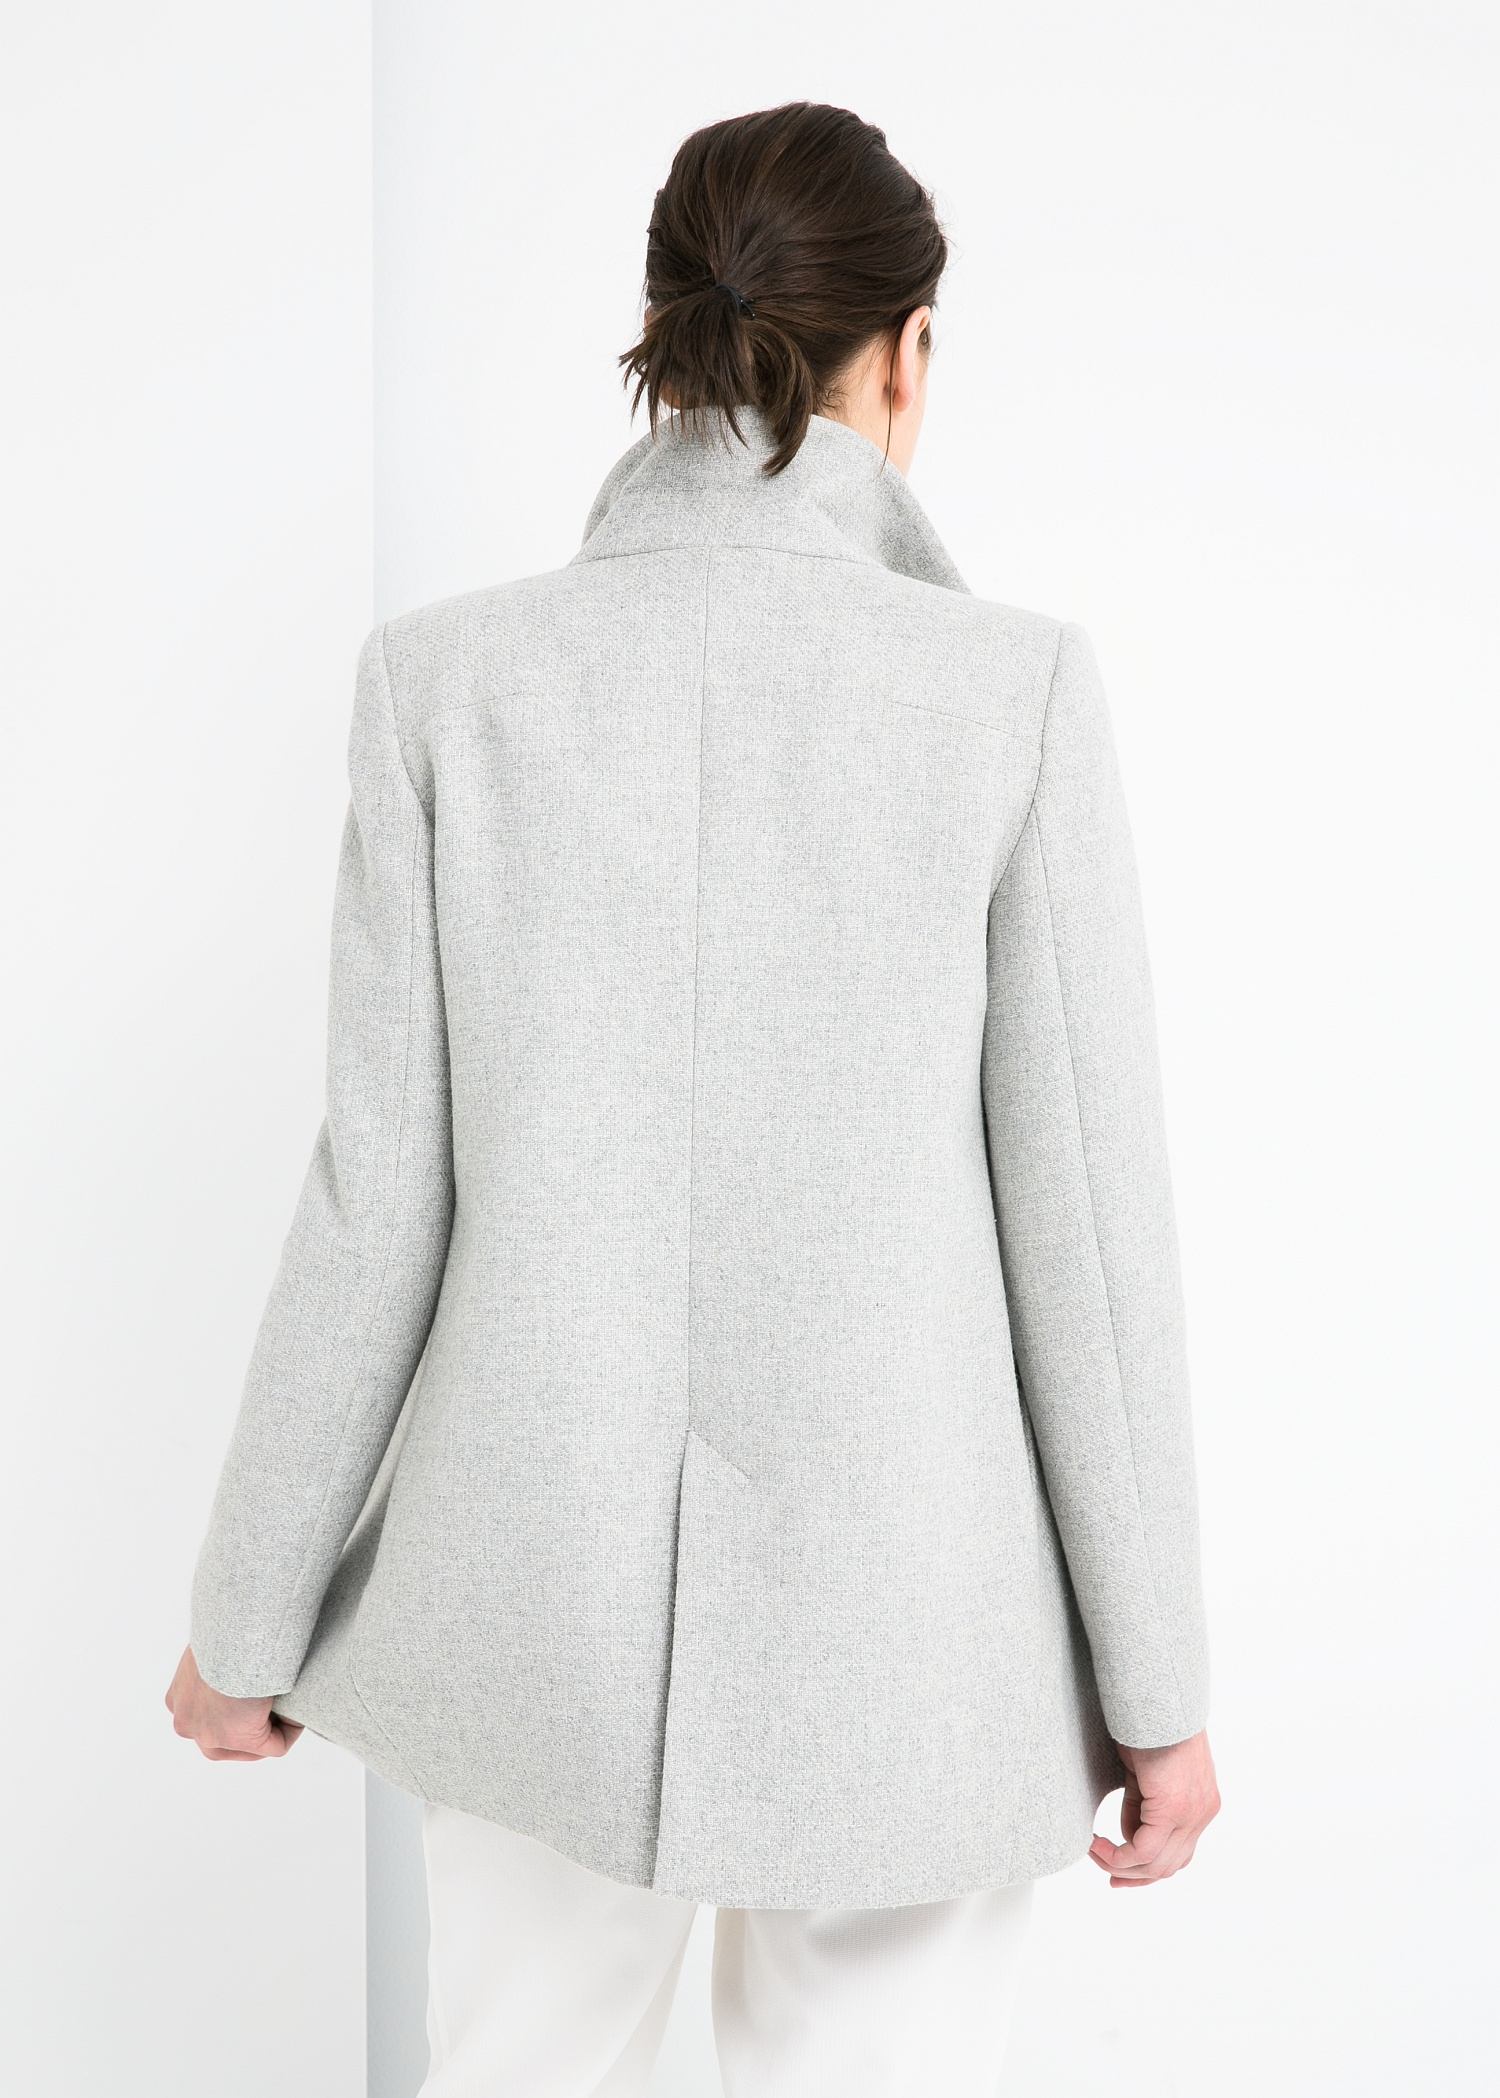 Lyst - Mango Wool Blend Straight Cut Coat in Gray for Men